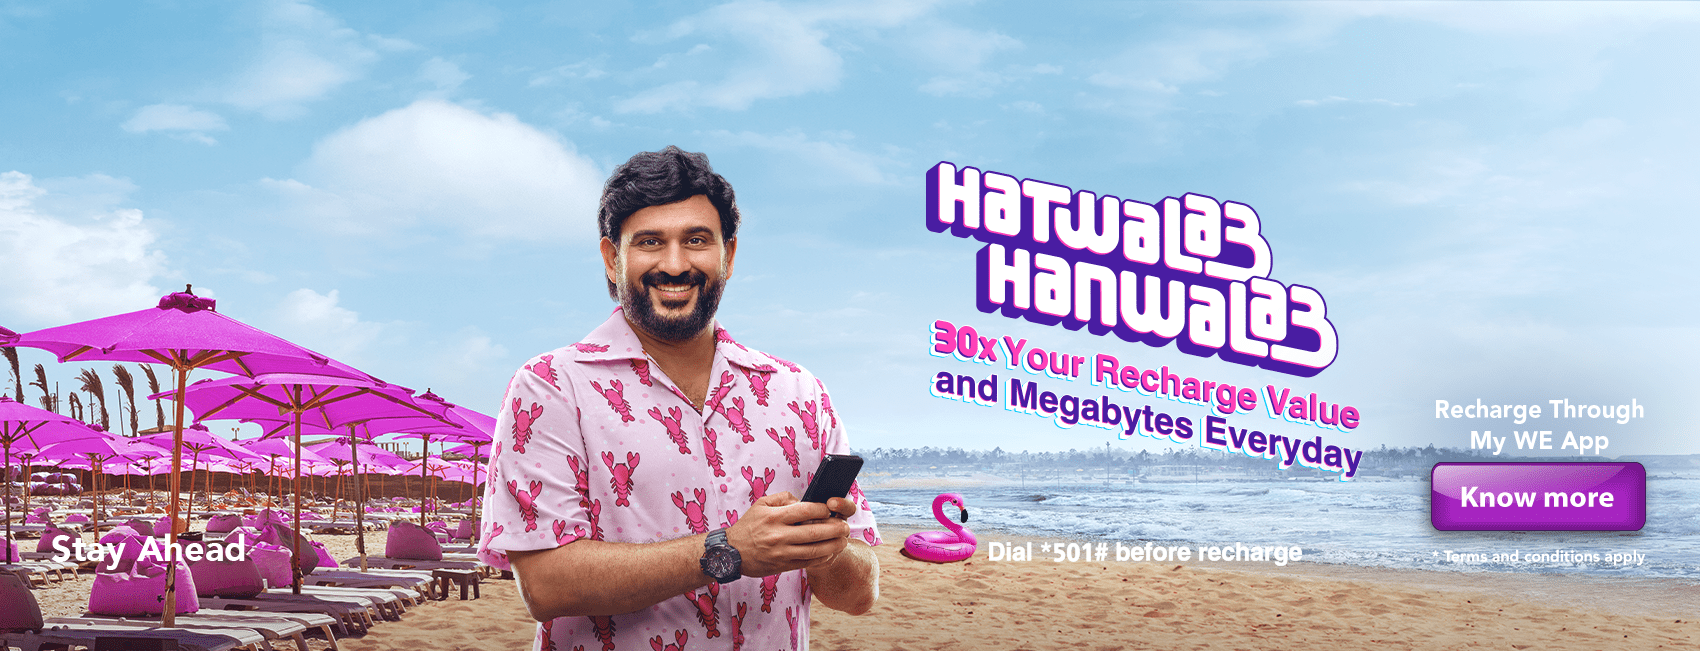 Hatwala3, Hanwala3.. 30X your recharge value and Megabytes Everyday